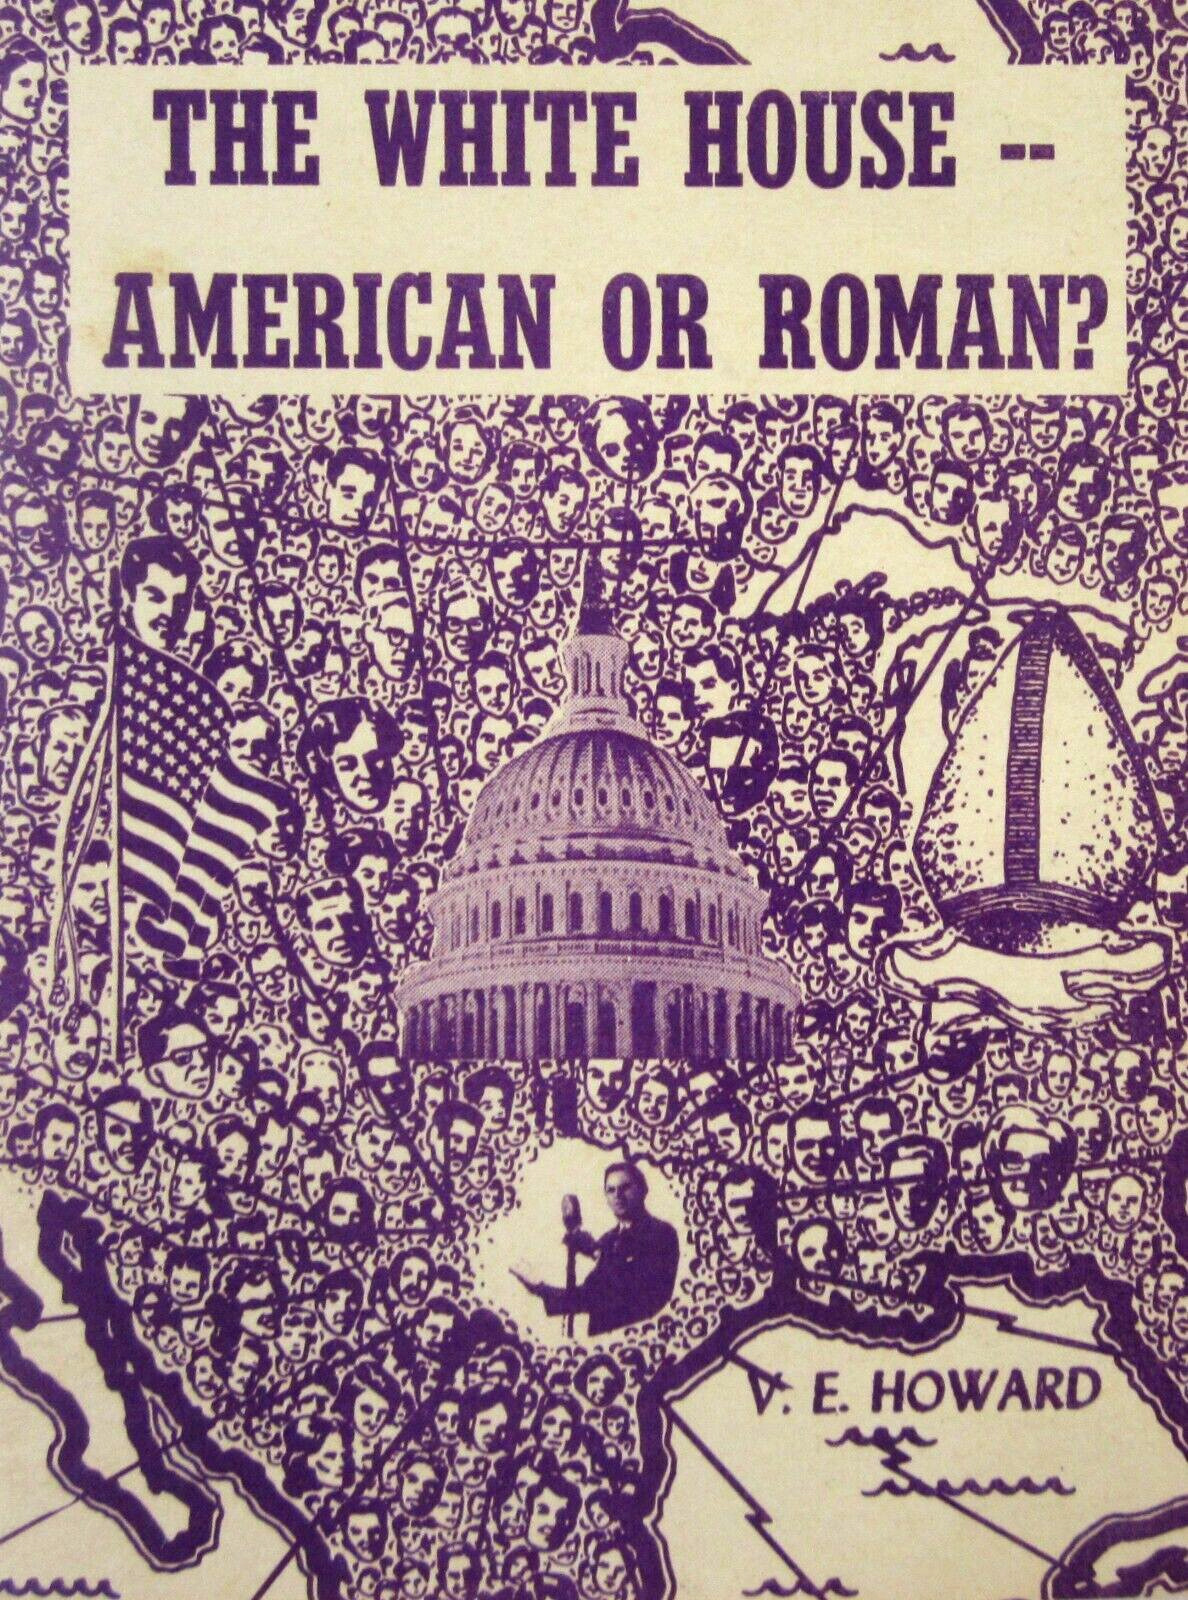 John F Kennedy Campaign Anti JFK White House American or Roman V.E. Howard 1960